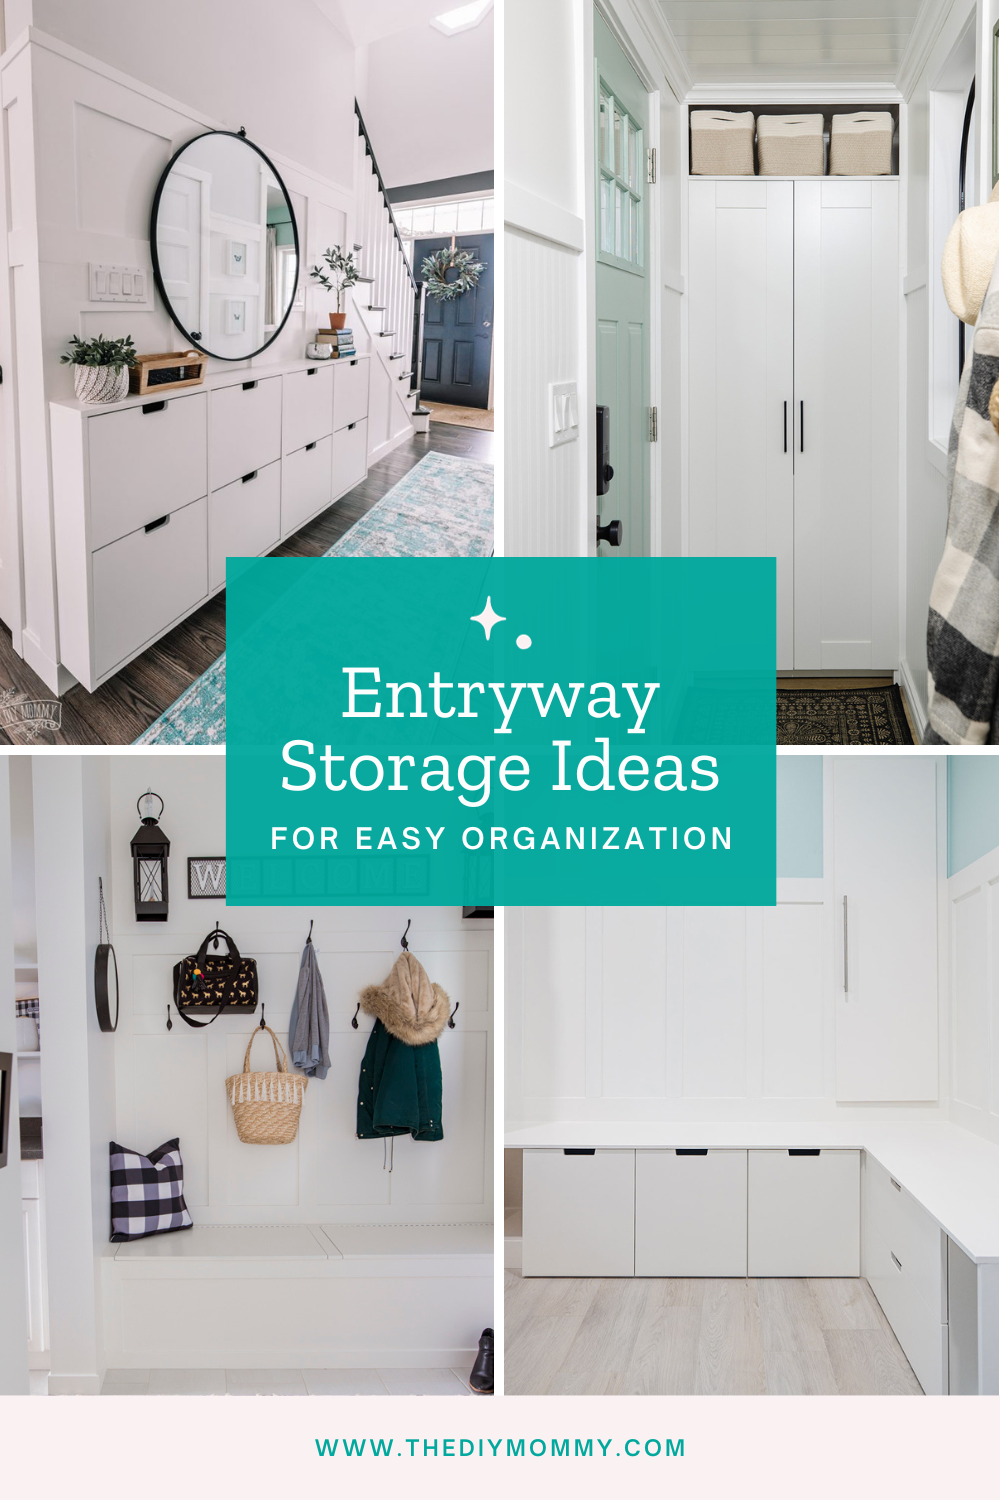 Entryway Storage Ideas for Quick & Easy Organization